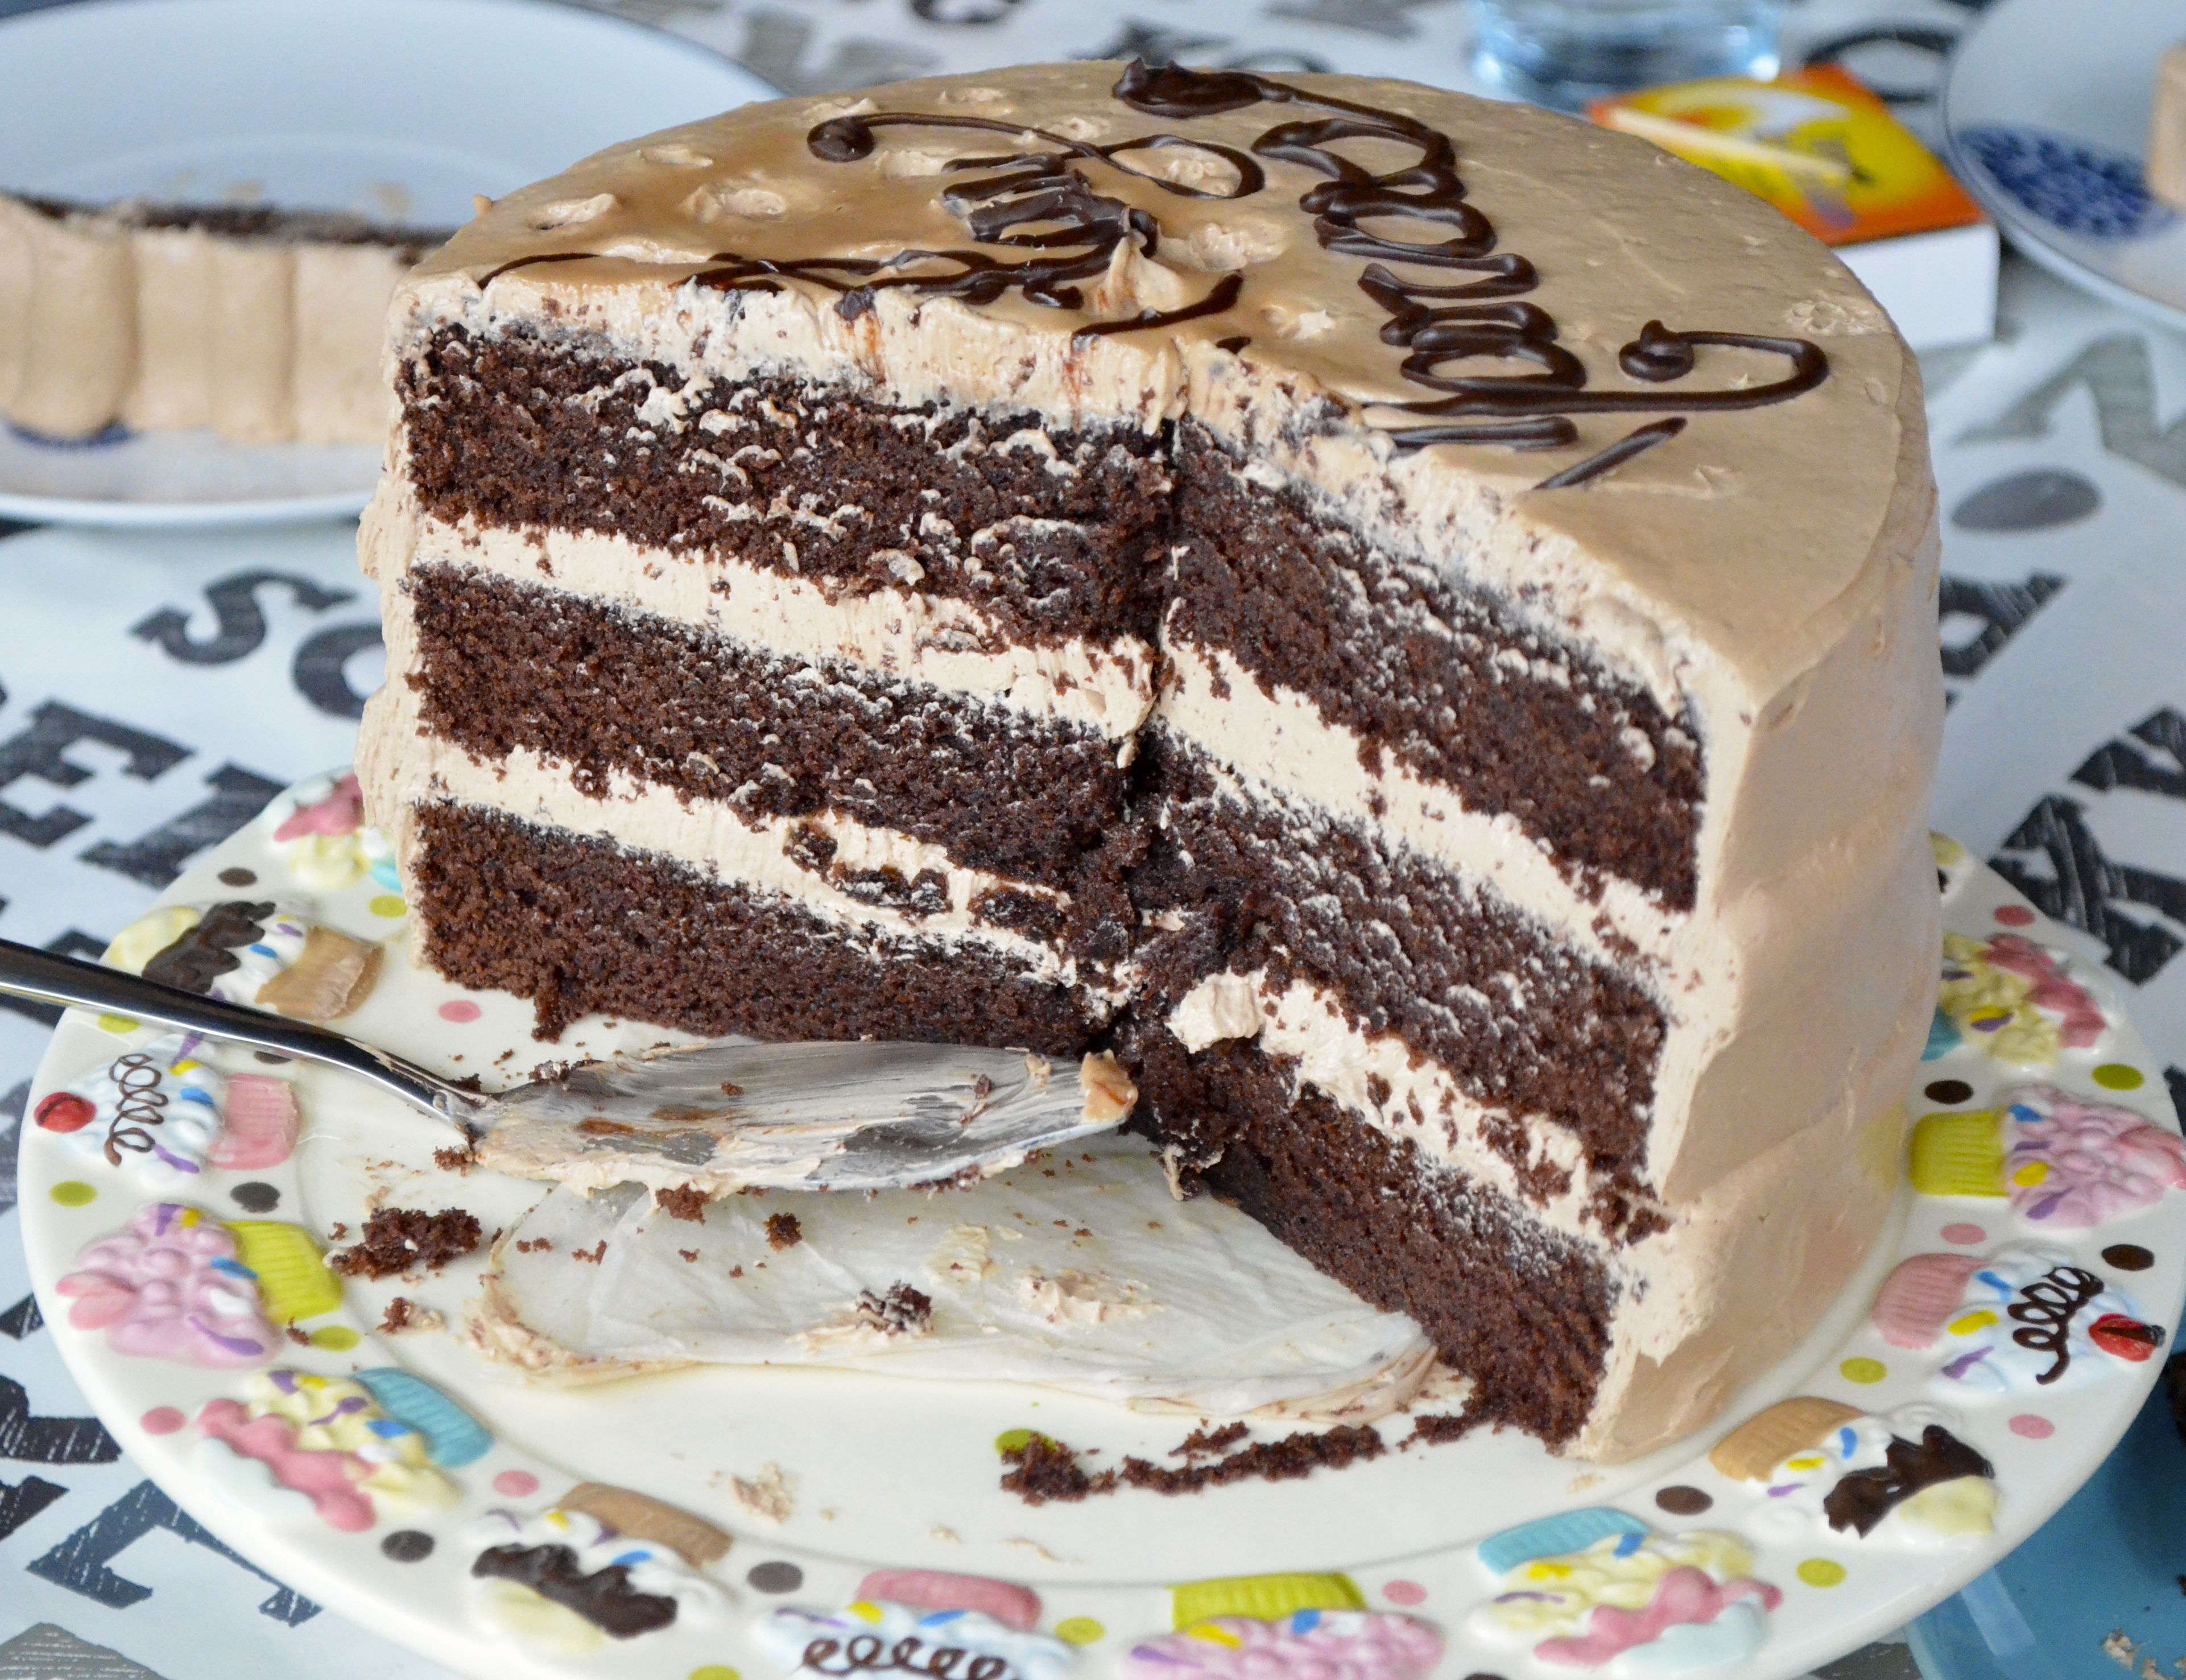 Chocolate cake cut